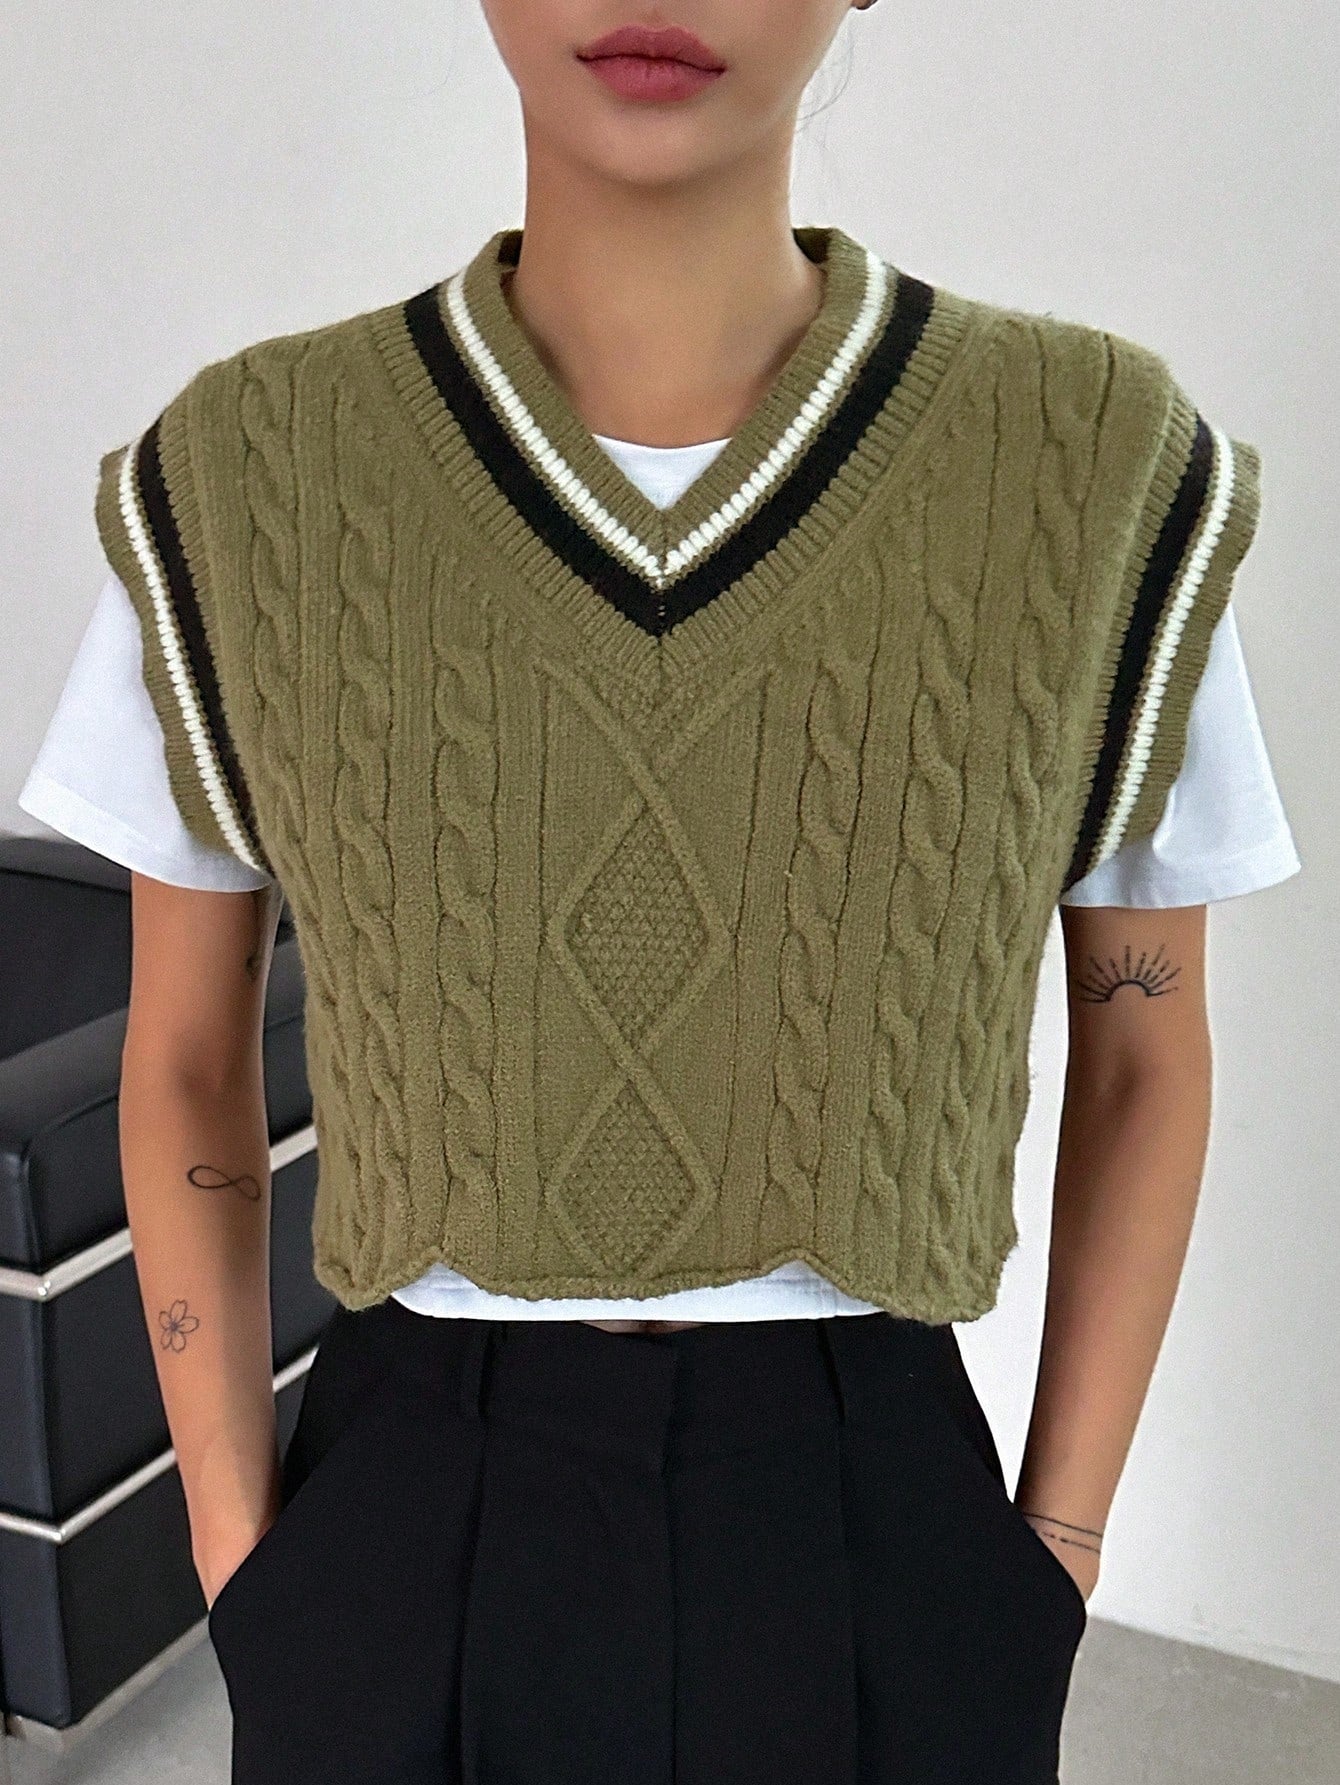 1pc Contrast Striped Trim Cable Knit Sweater Vest